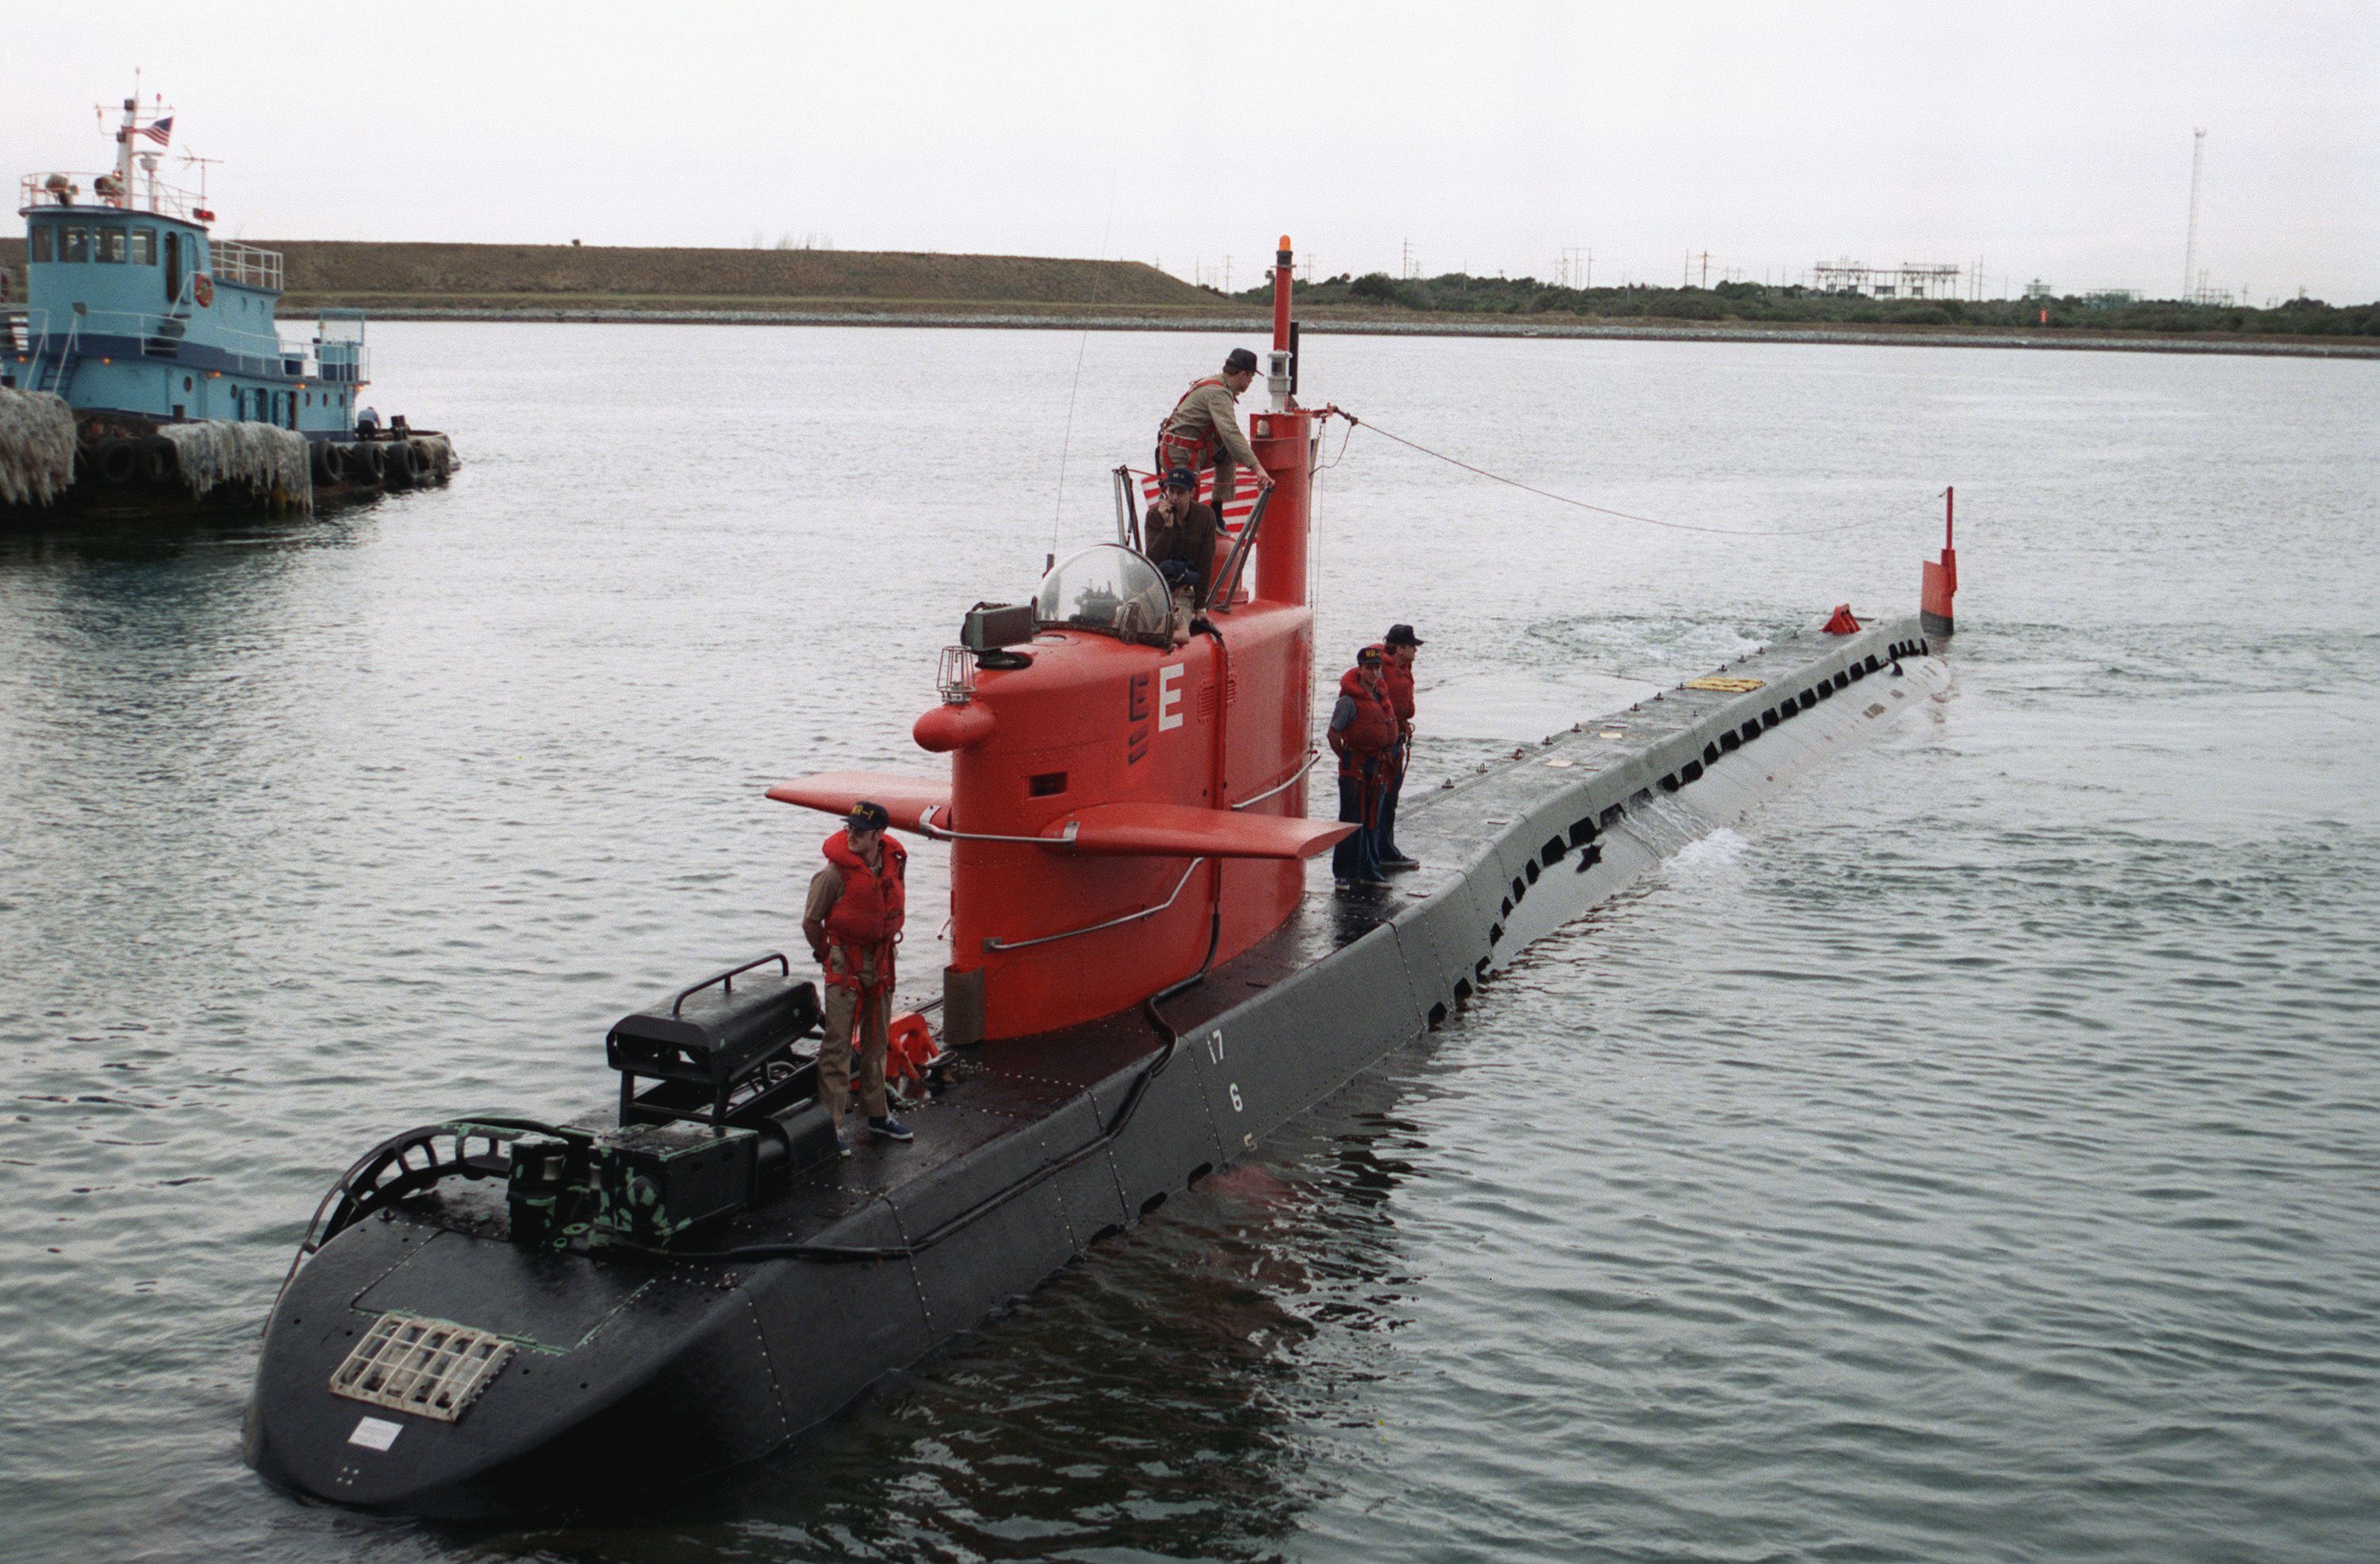 Batiscafo Mir-1, o submarino que estudou o Titanic (e também fez